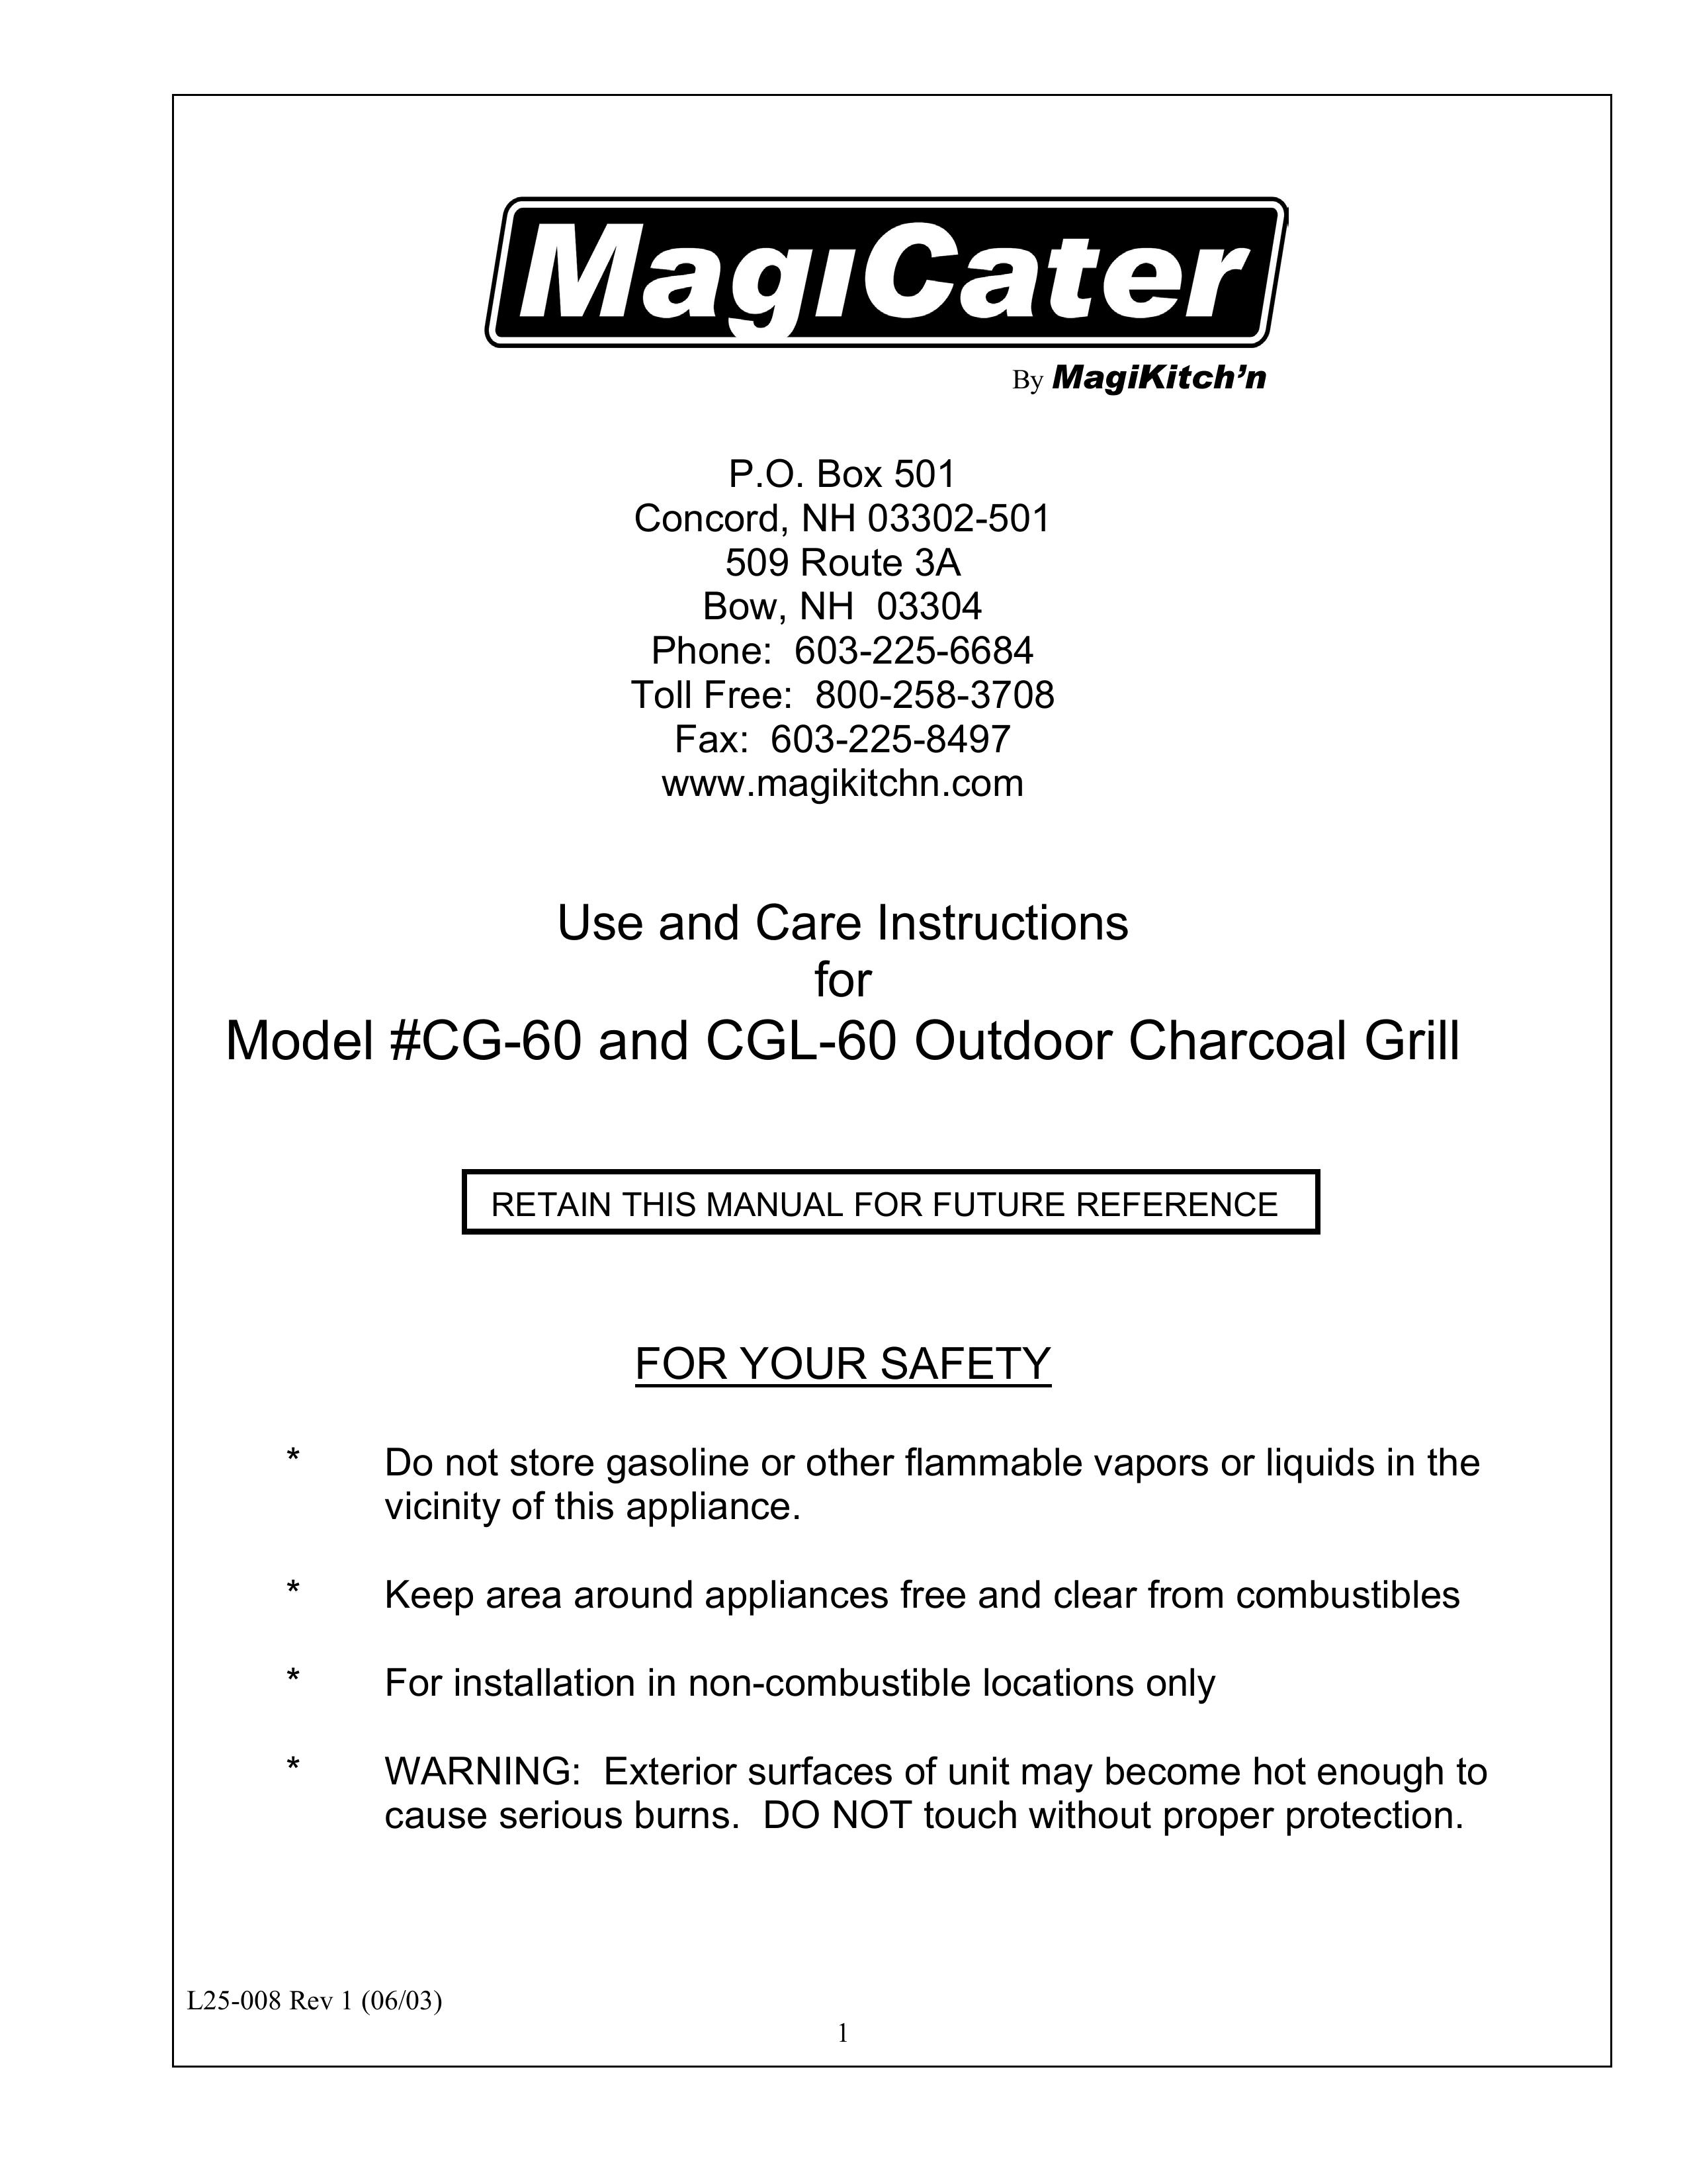 Magikitch'n CG-60 Charcoal Grill User Manual